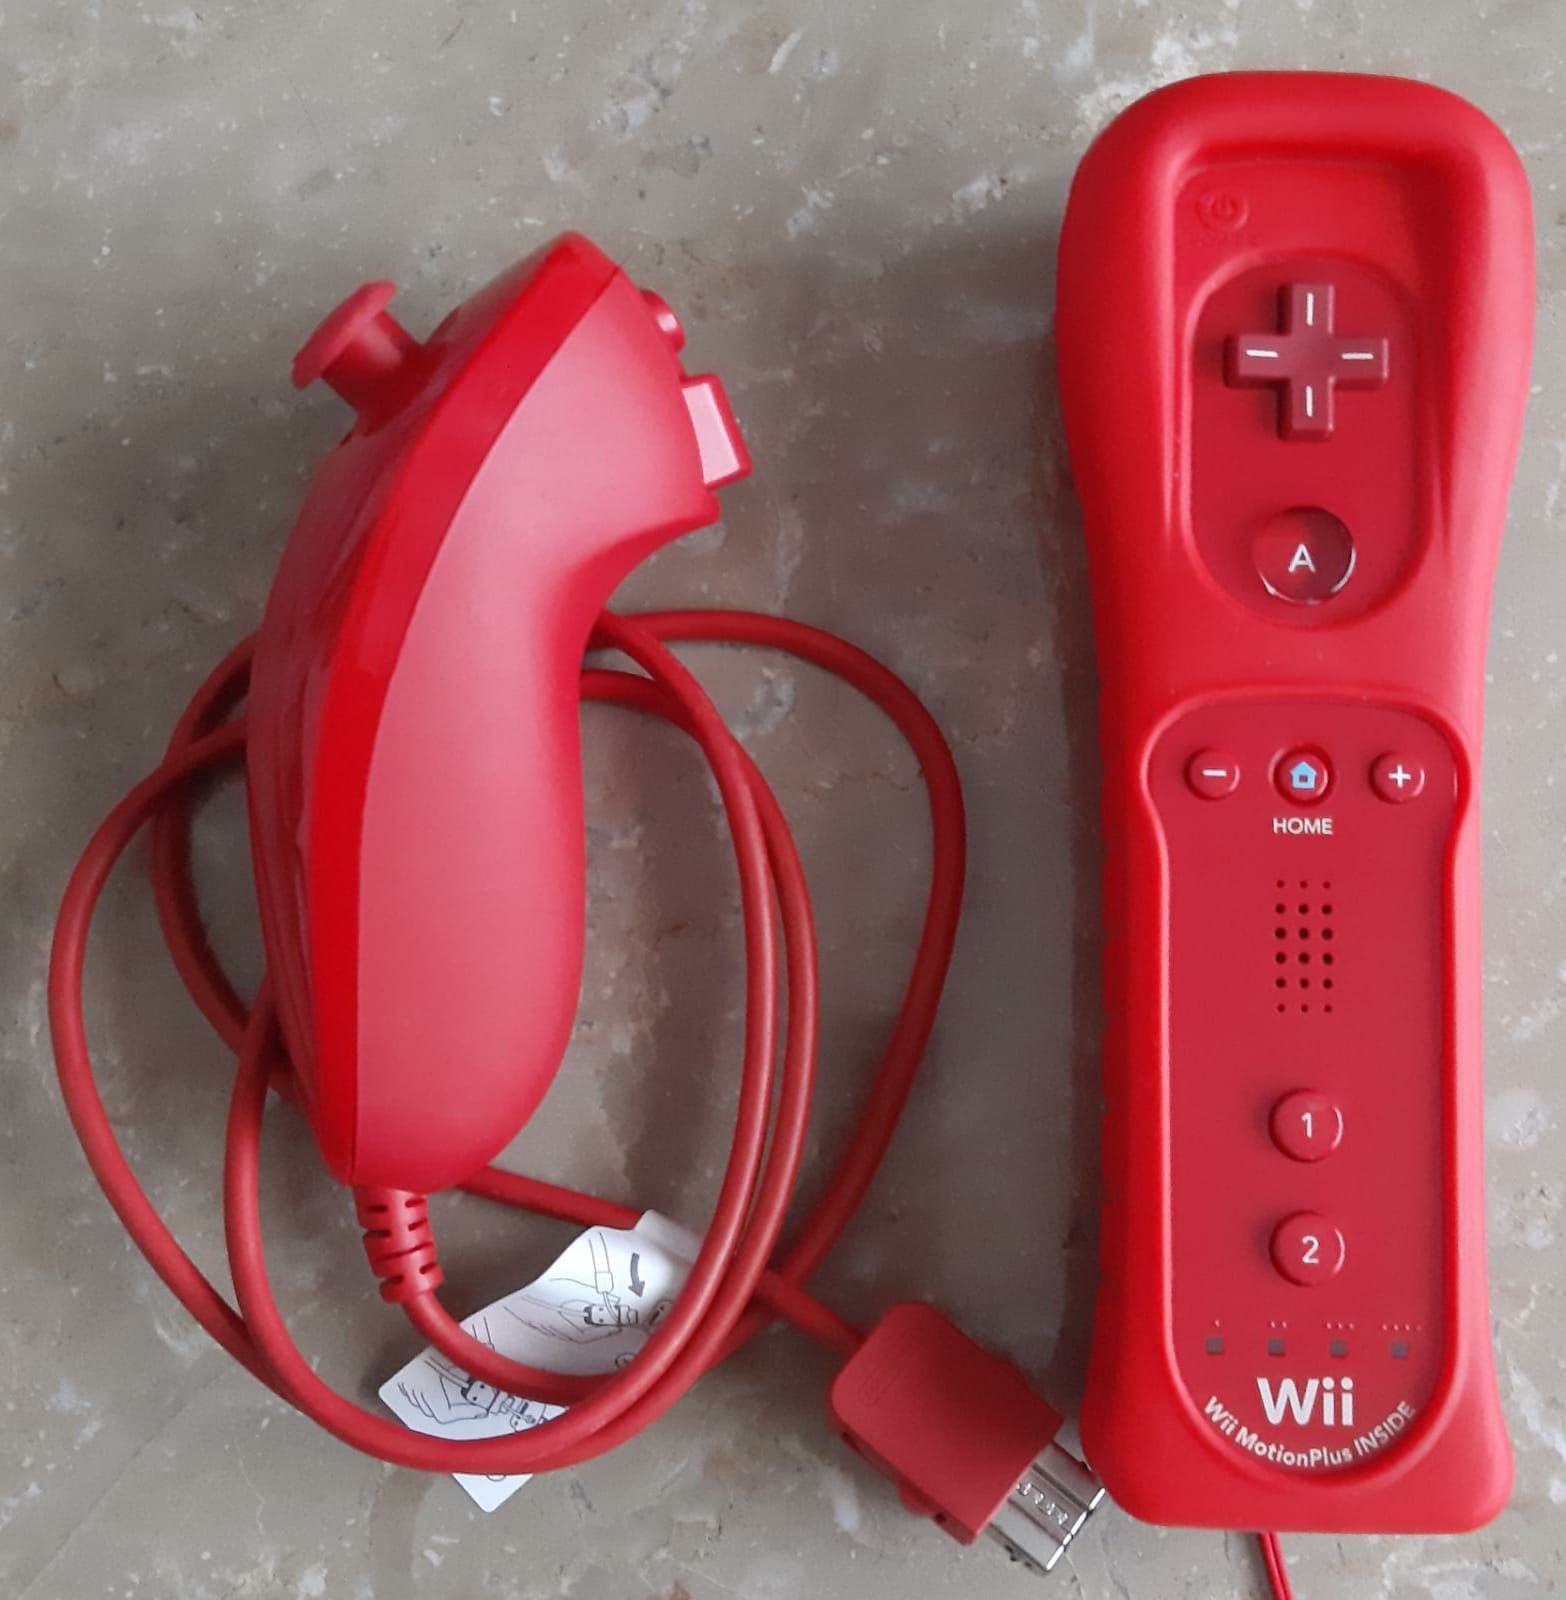 Consola Nintendo Wii Mini + Comando Wii motion plus inside + Nunchuck